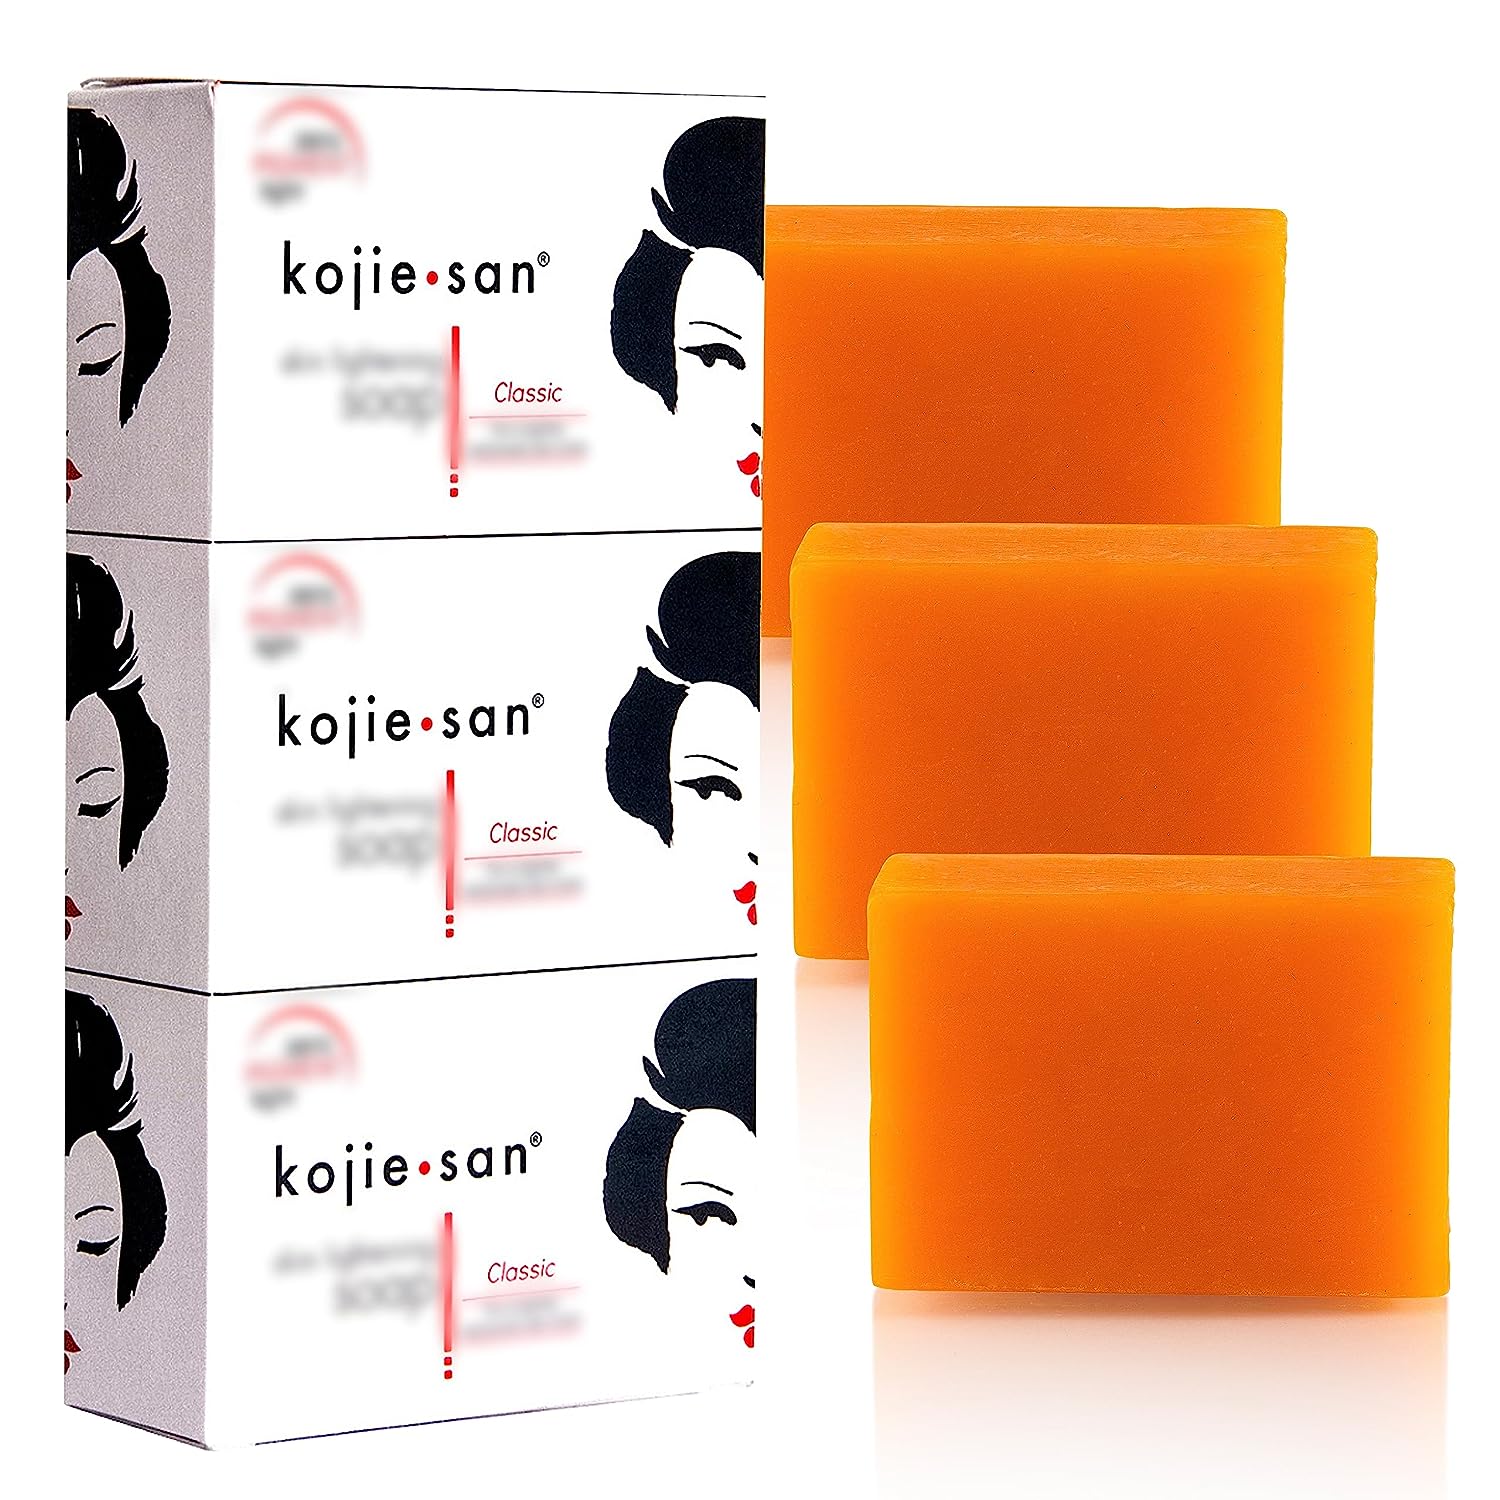 Kojie San Skin Brightening Soap - Original Kojic Acid Soap for Dark Spots, Hyperpigmentation, & Scars with Coconut & Tea Tree Oil-  x 3 Bars